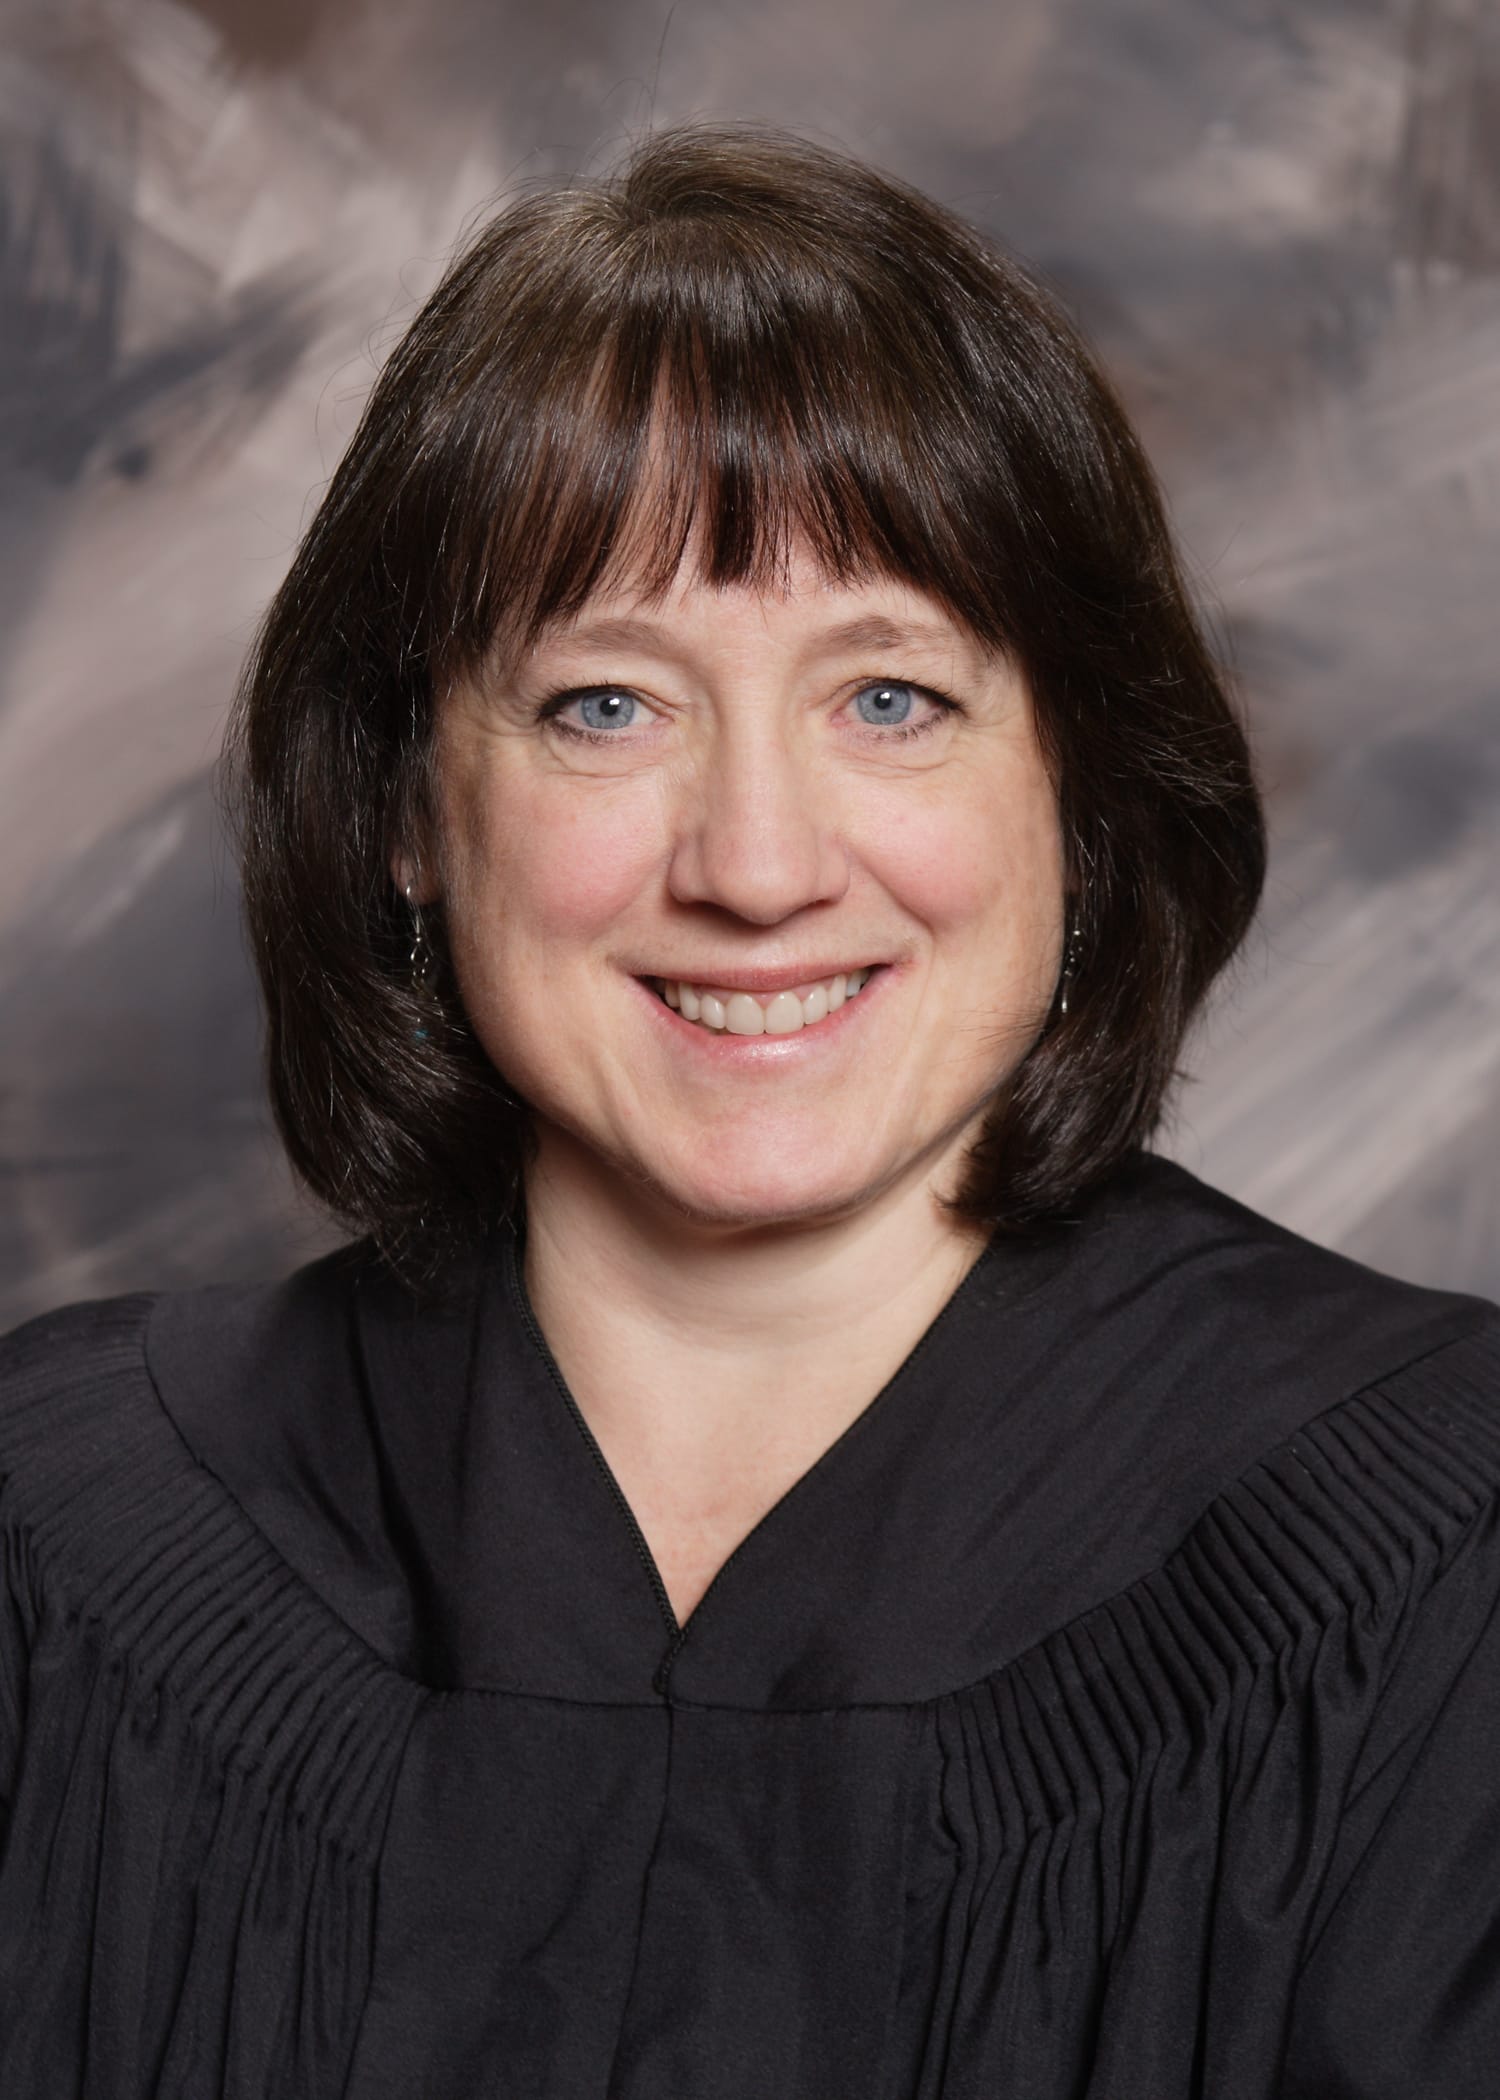 Barbara Madsen
Washington's chief justice